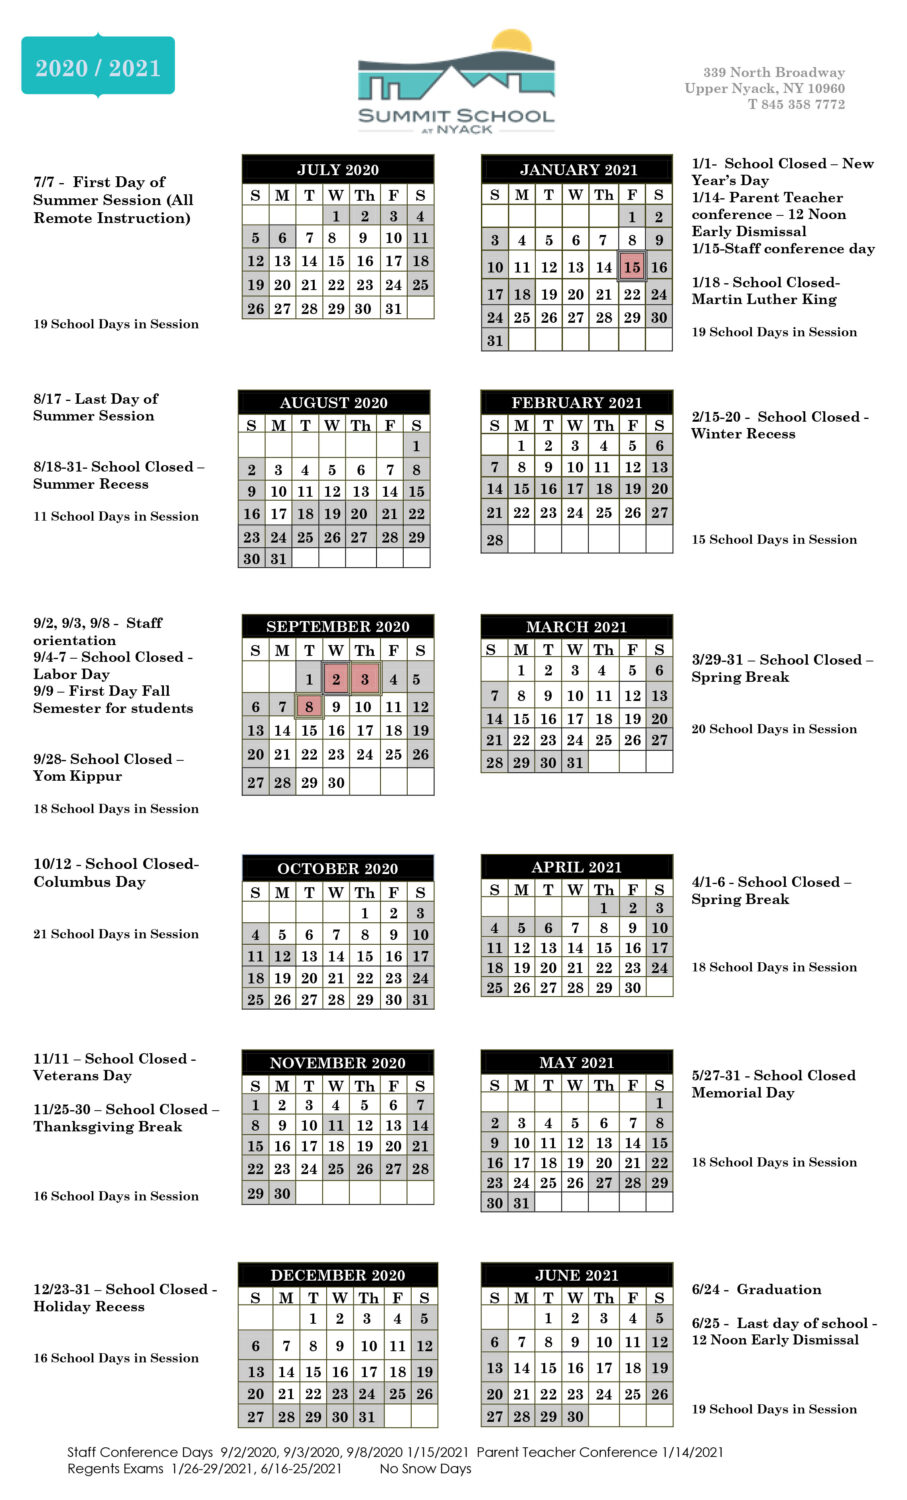 summit-school-at-nyack-school-calendar